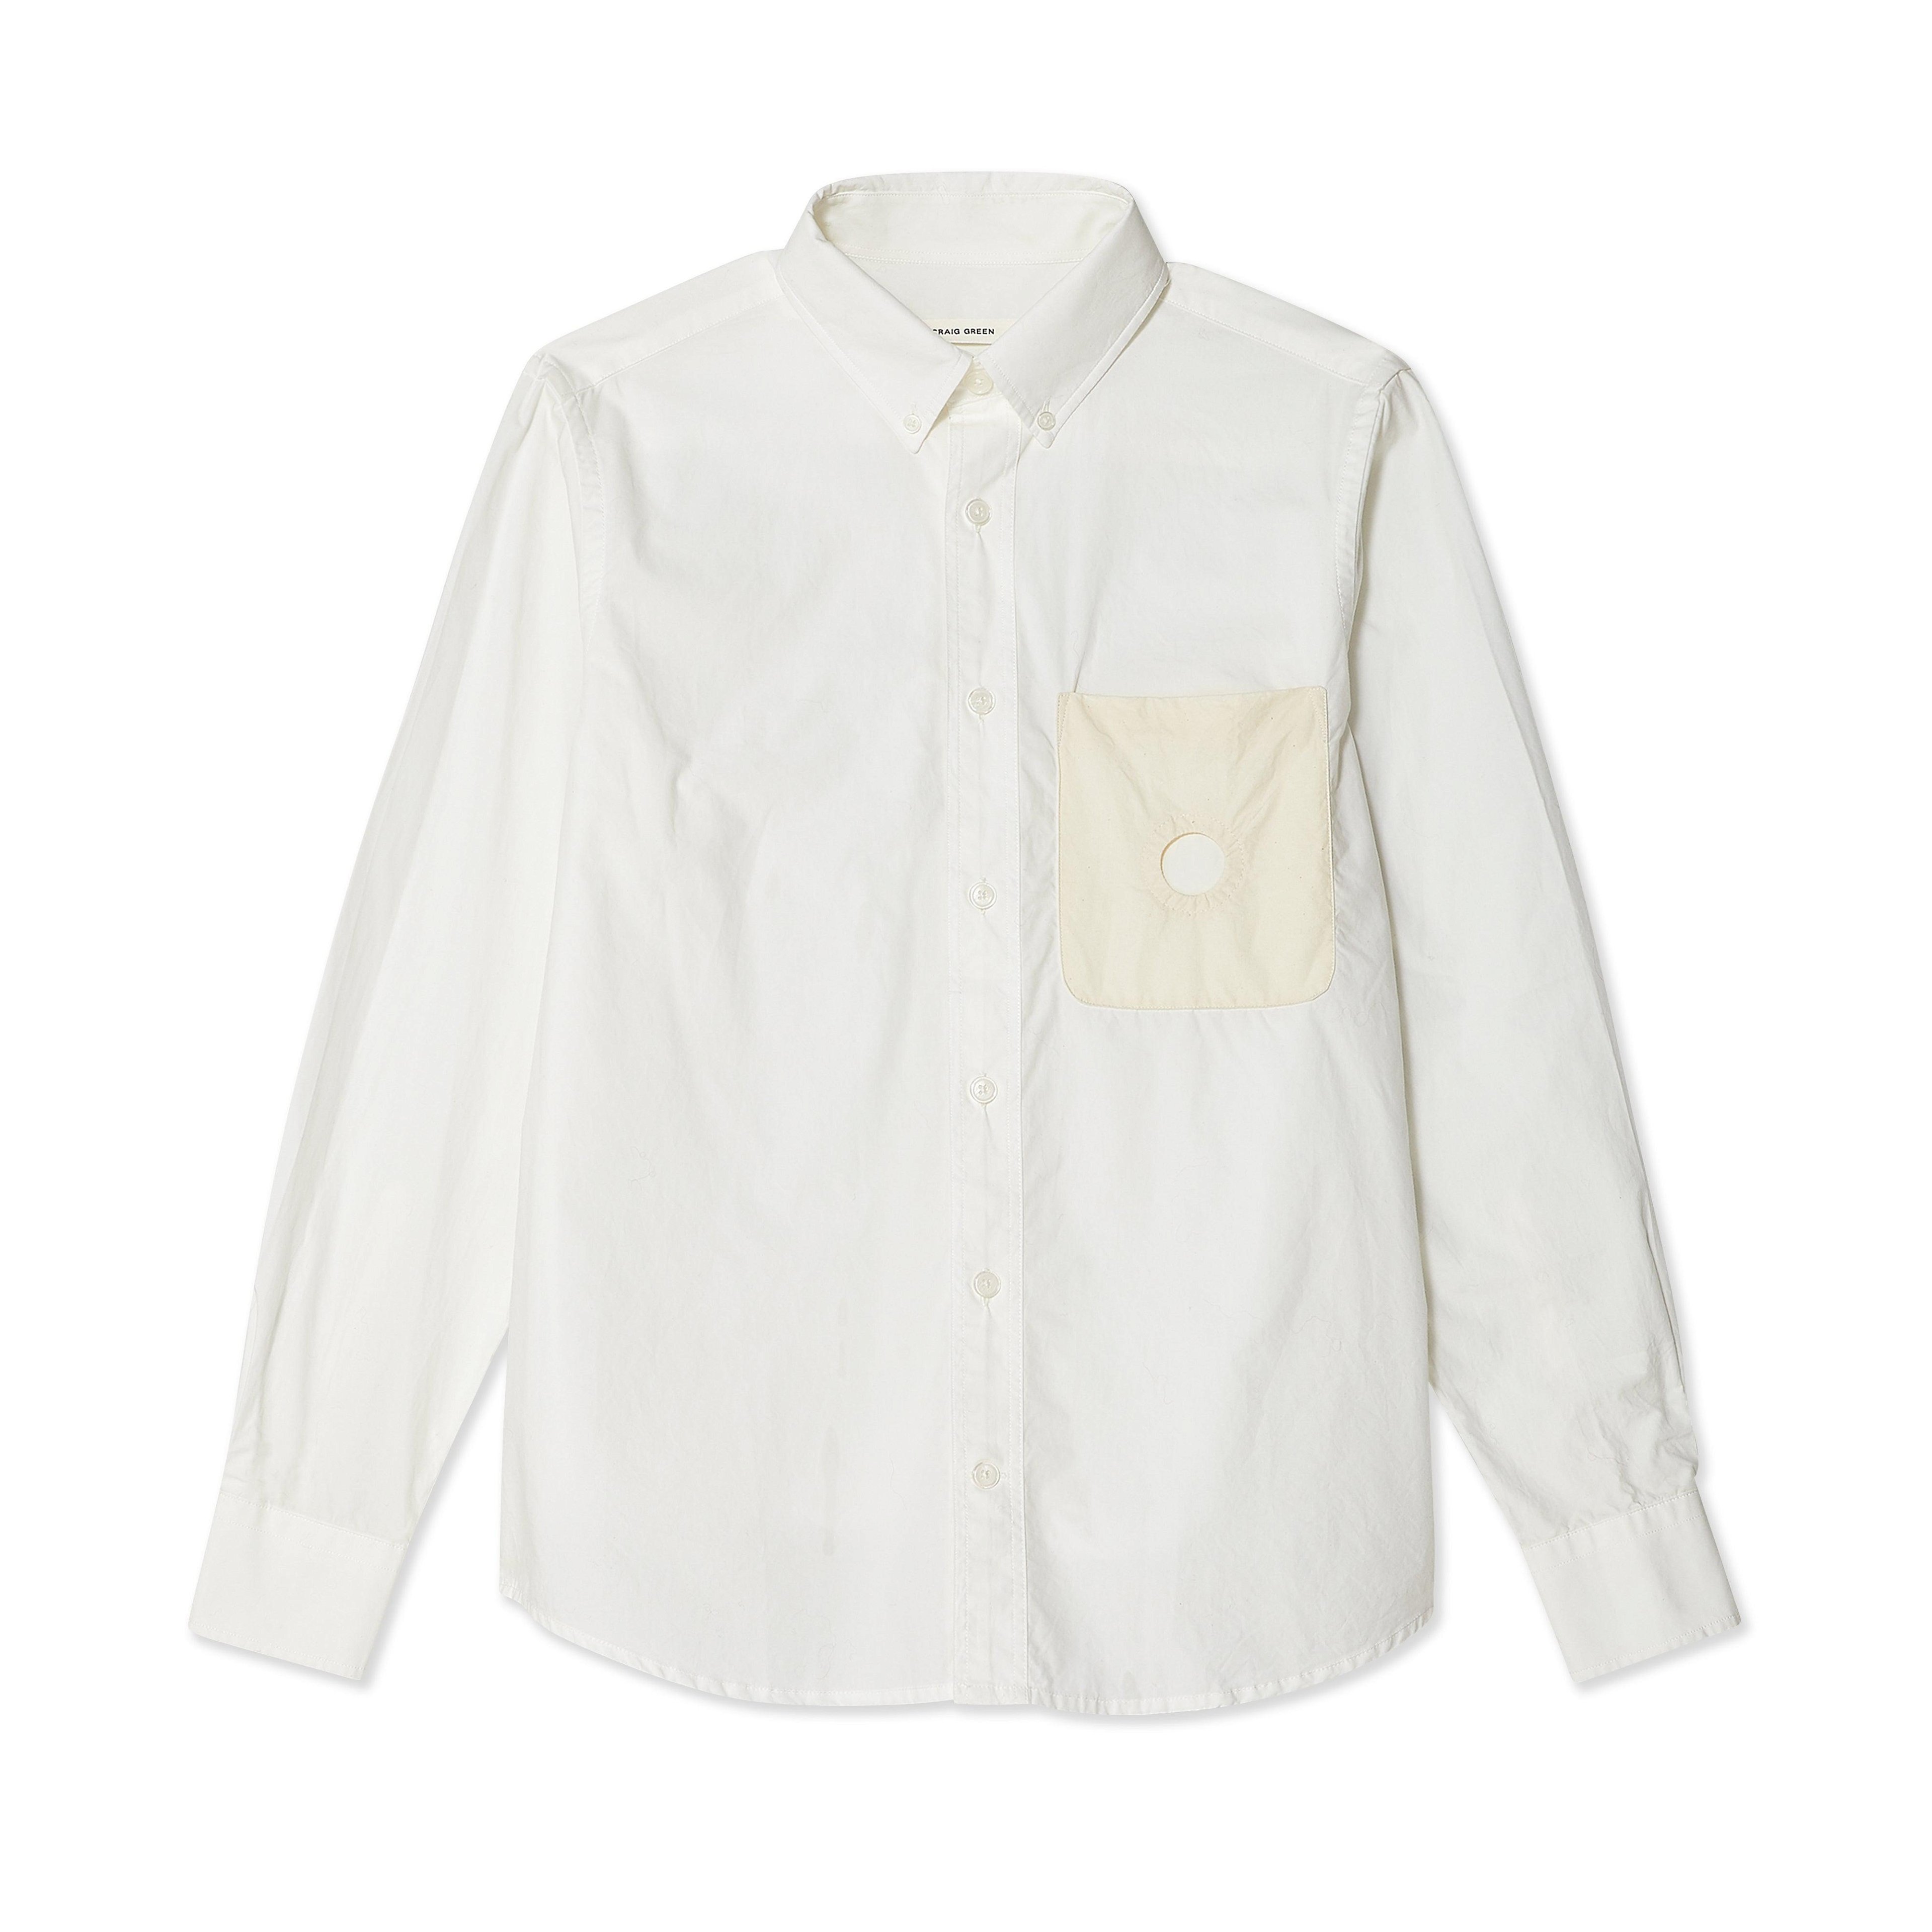 Craig Green - Men’s Uniform Shirt - (White) by CRAIG GREEN